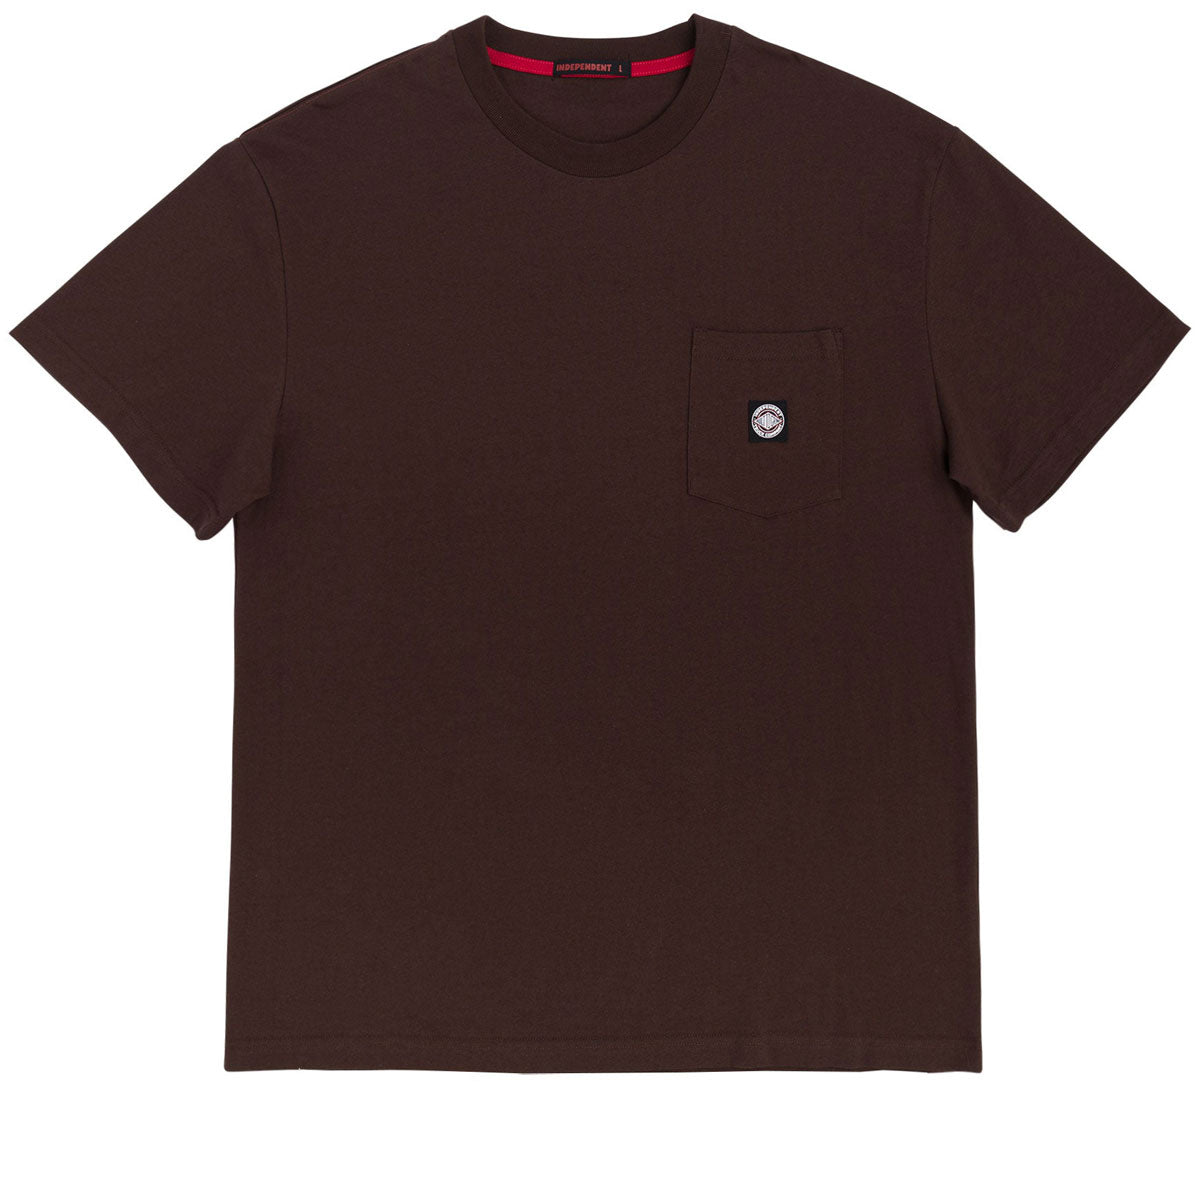 Independent BTG Alta Pocket T-Shirt - Dark Chocolate image 1